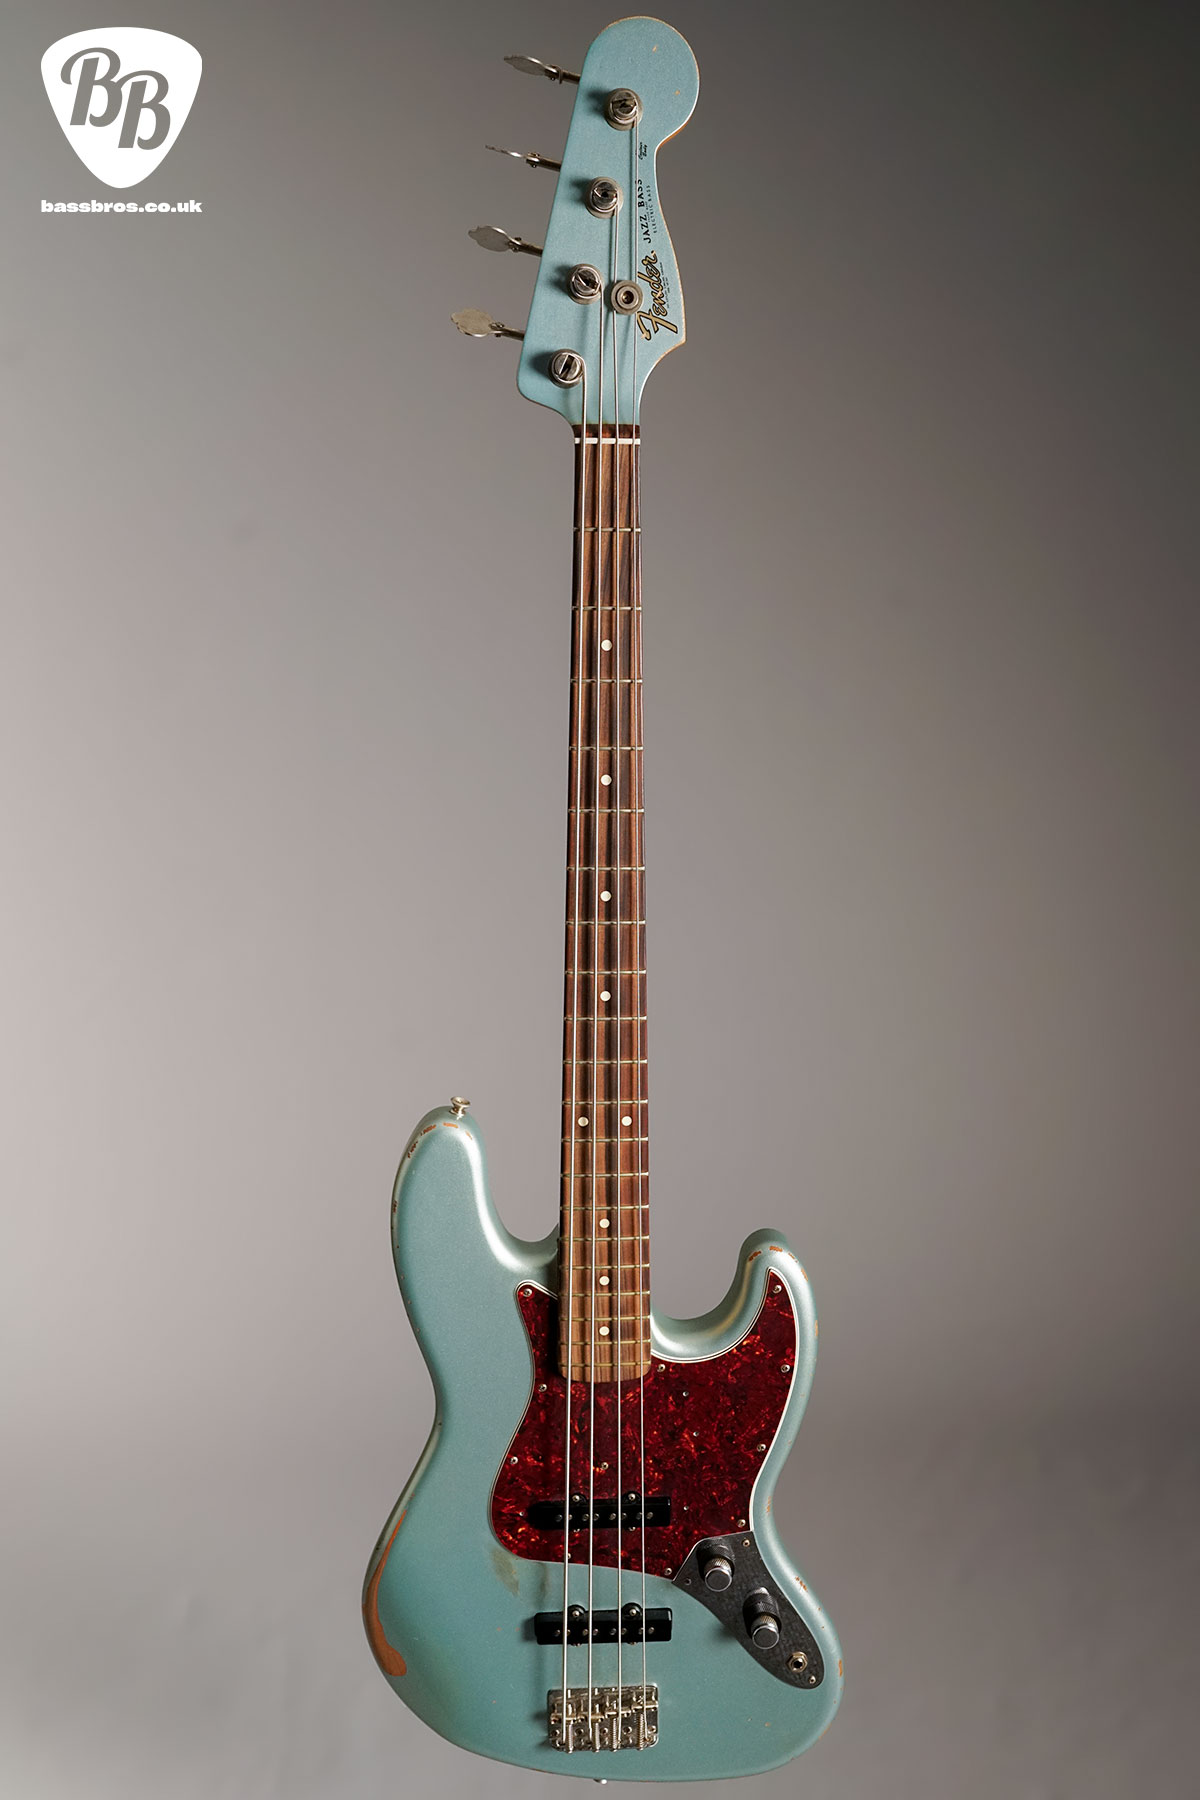 2021 Fender 60th Anniversary Road Worn '60s Jazz Bass | BassBros